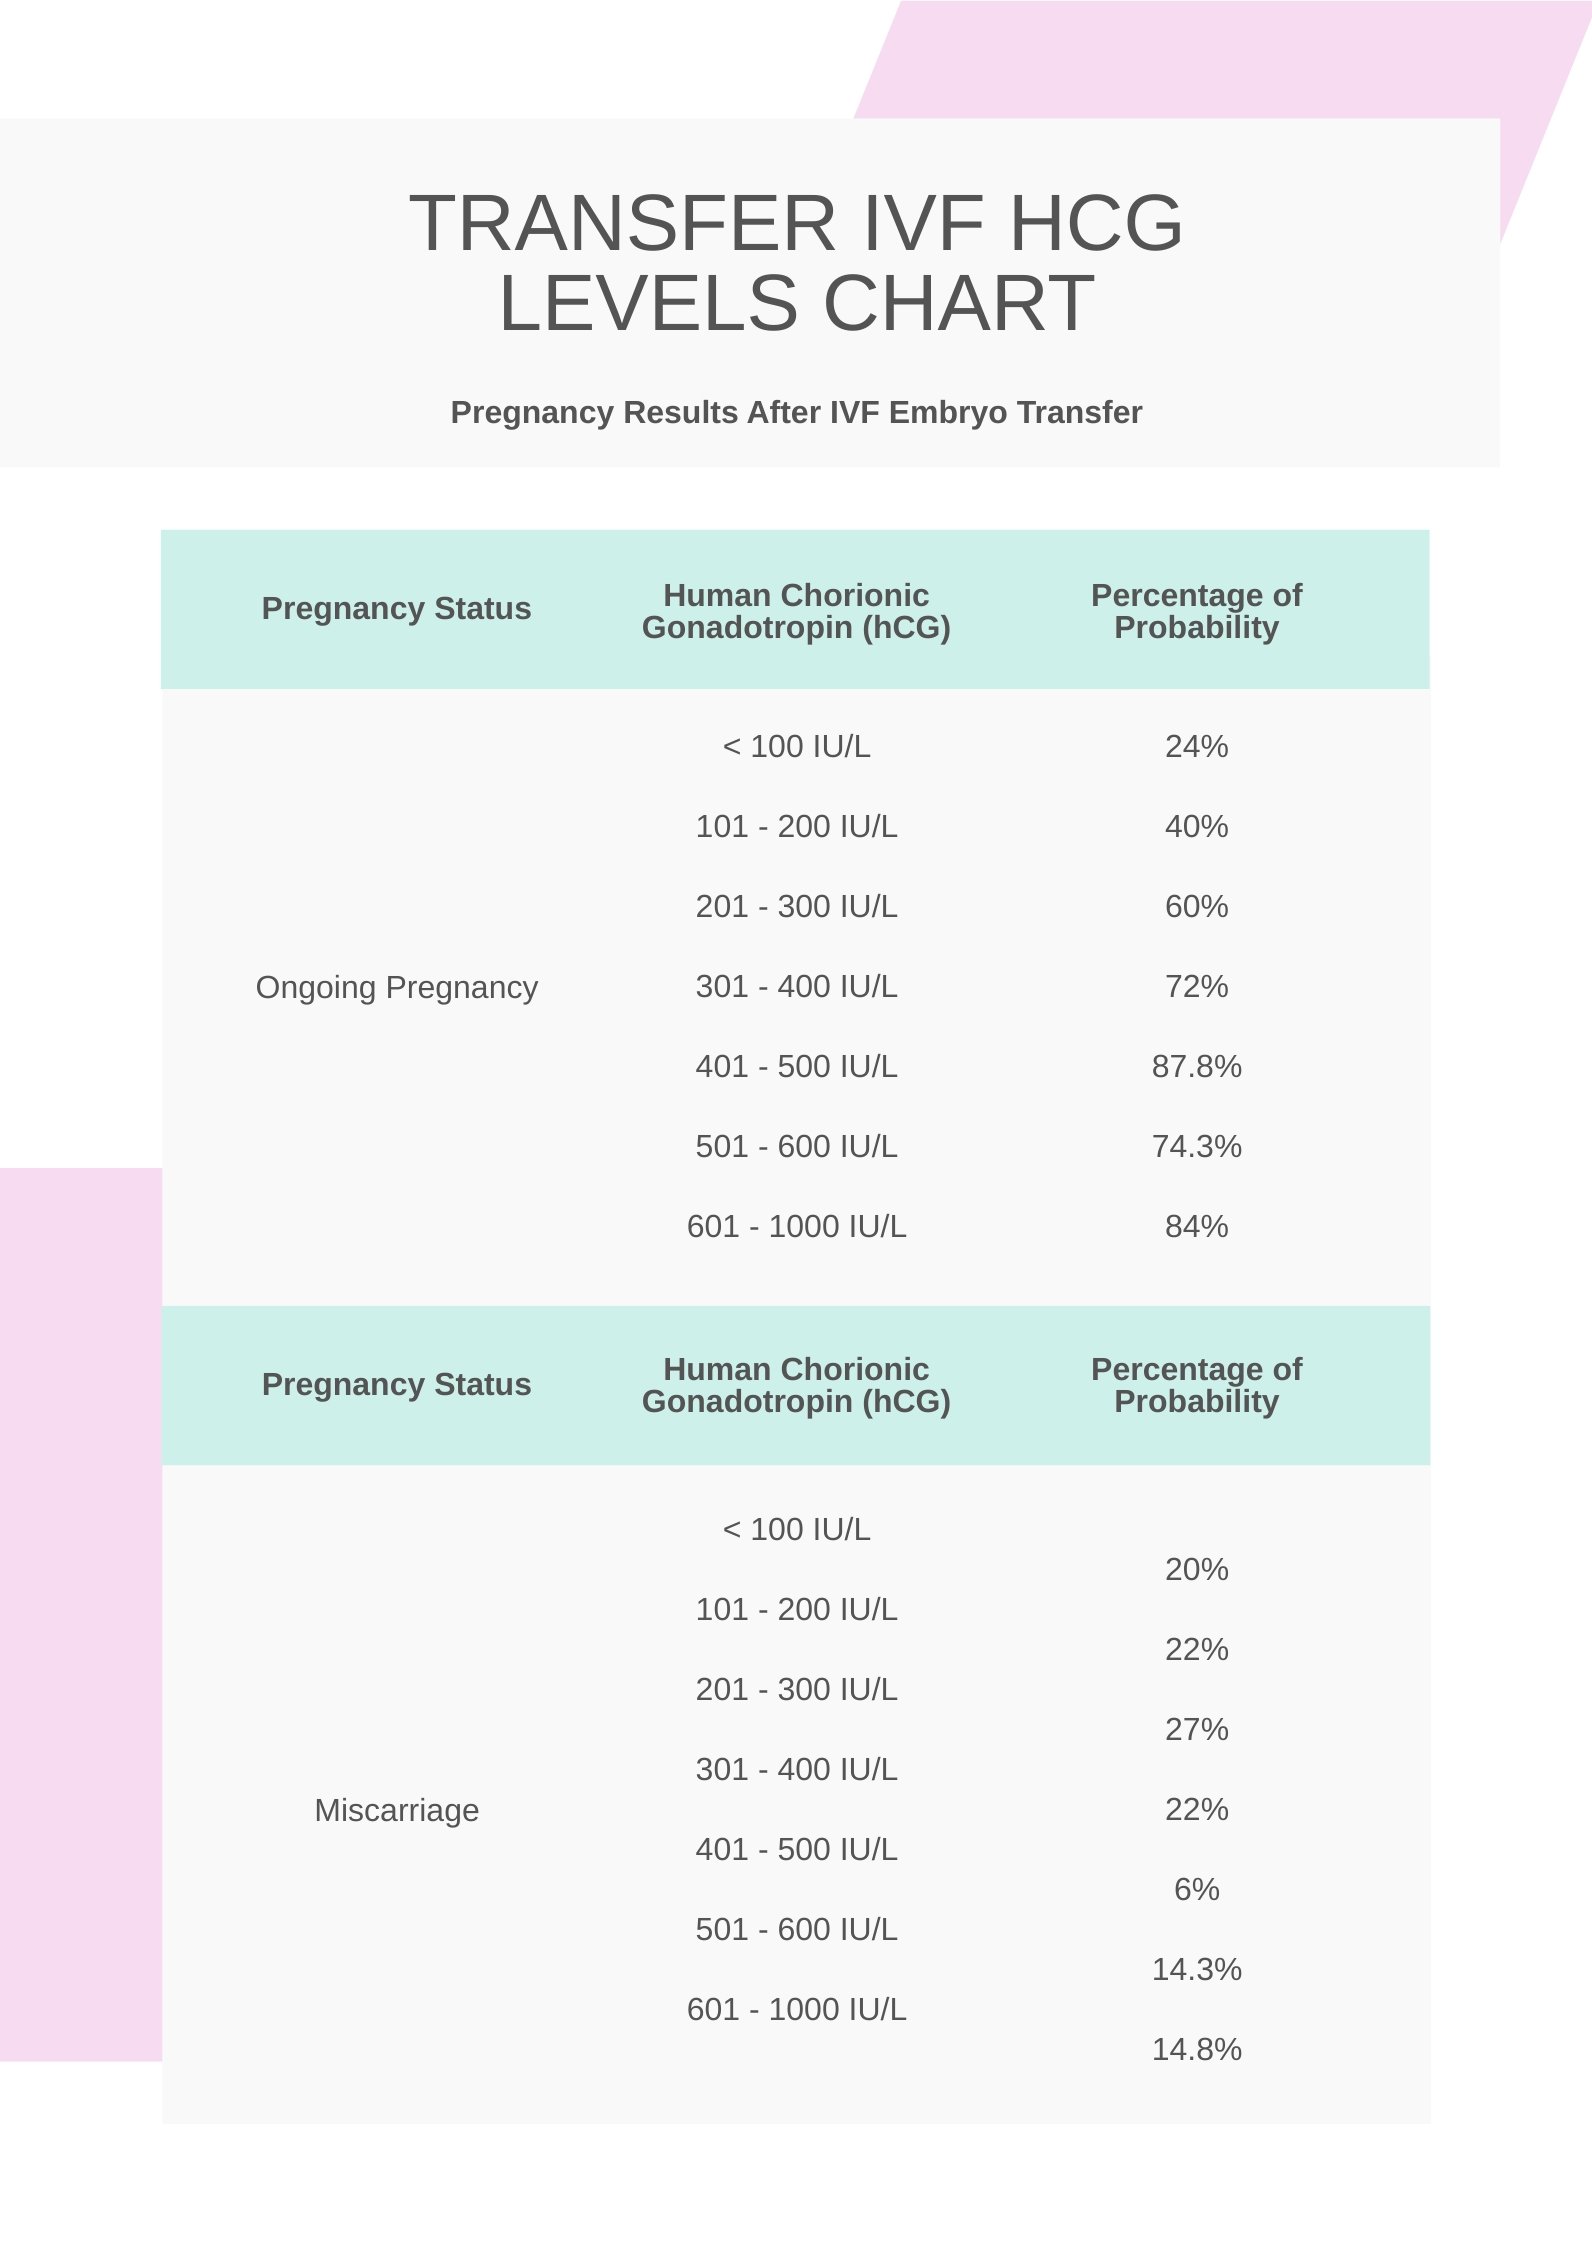 Transfer IVF HCG Levels Chart in PDF